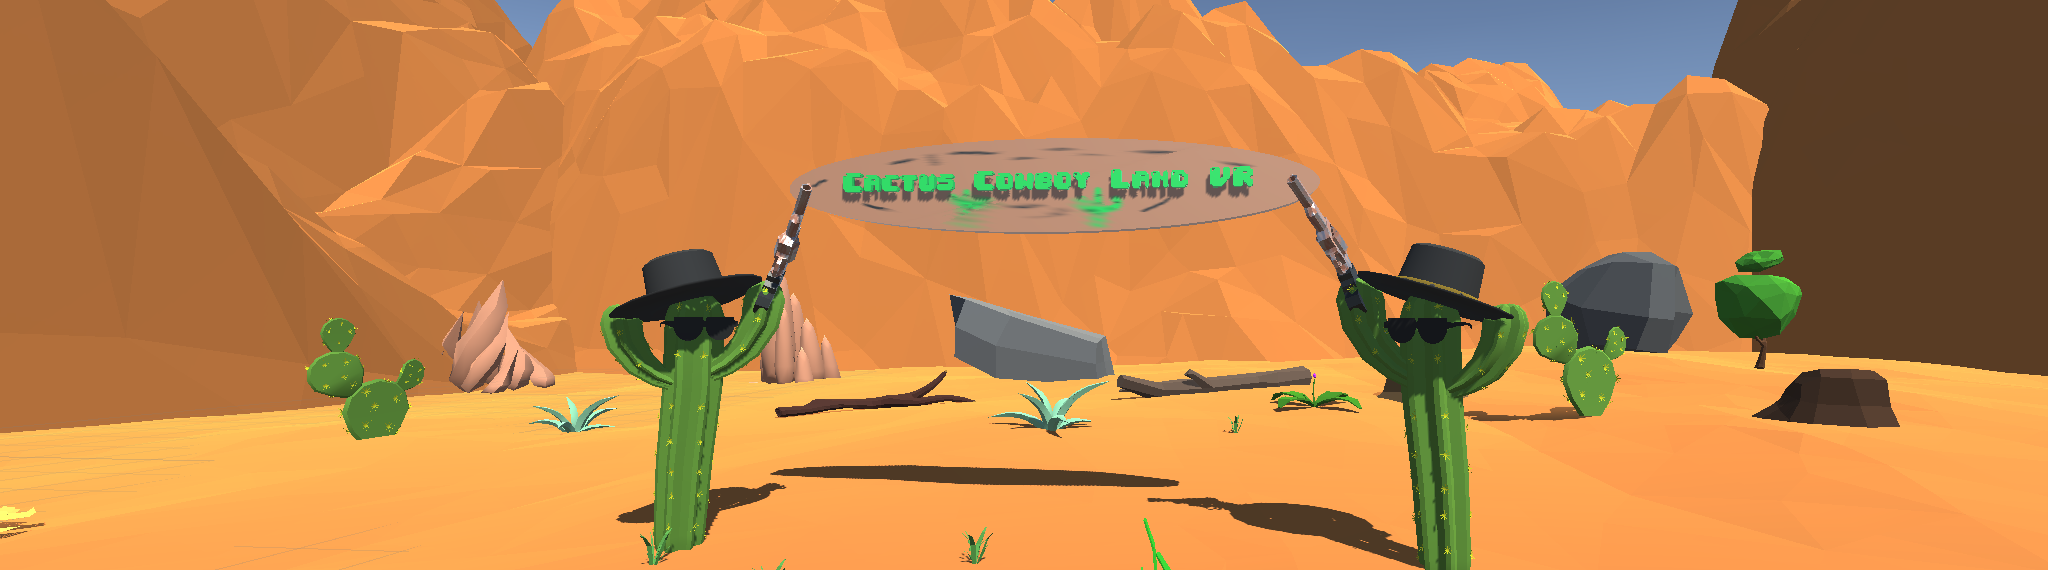 Cactus Cowboy Land VR